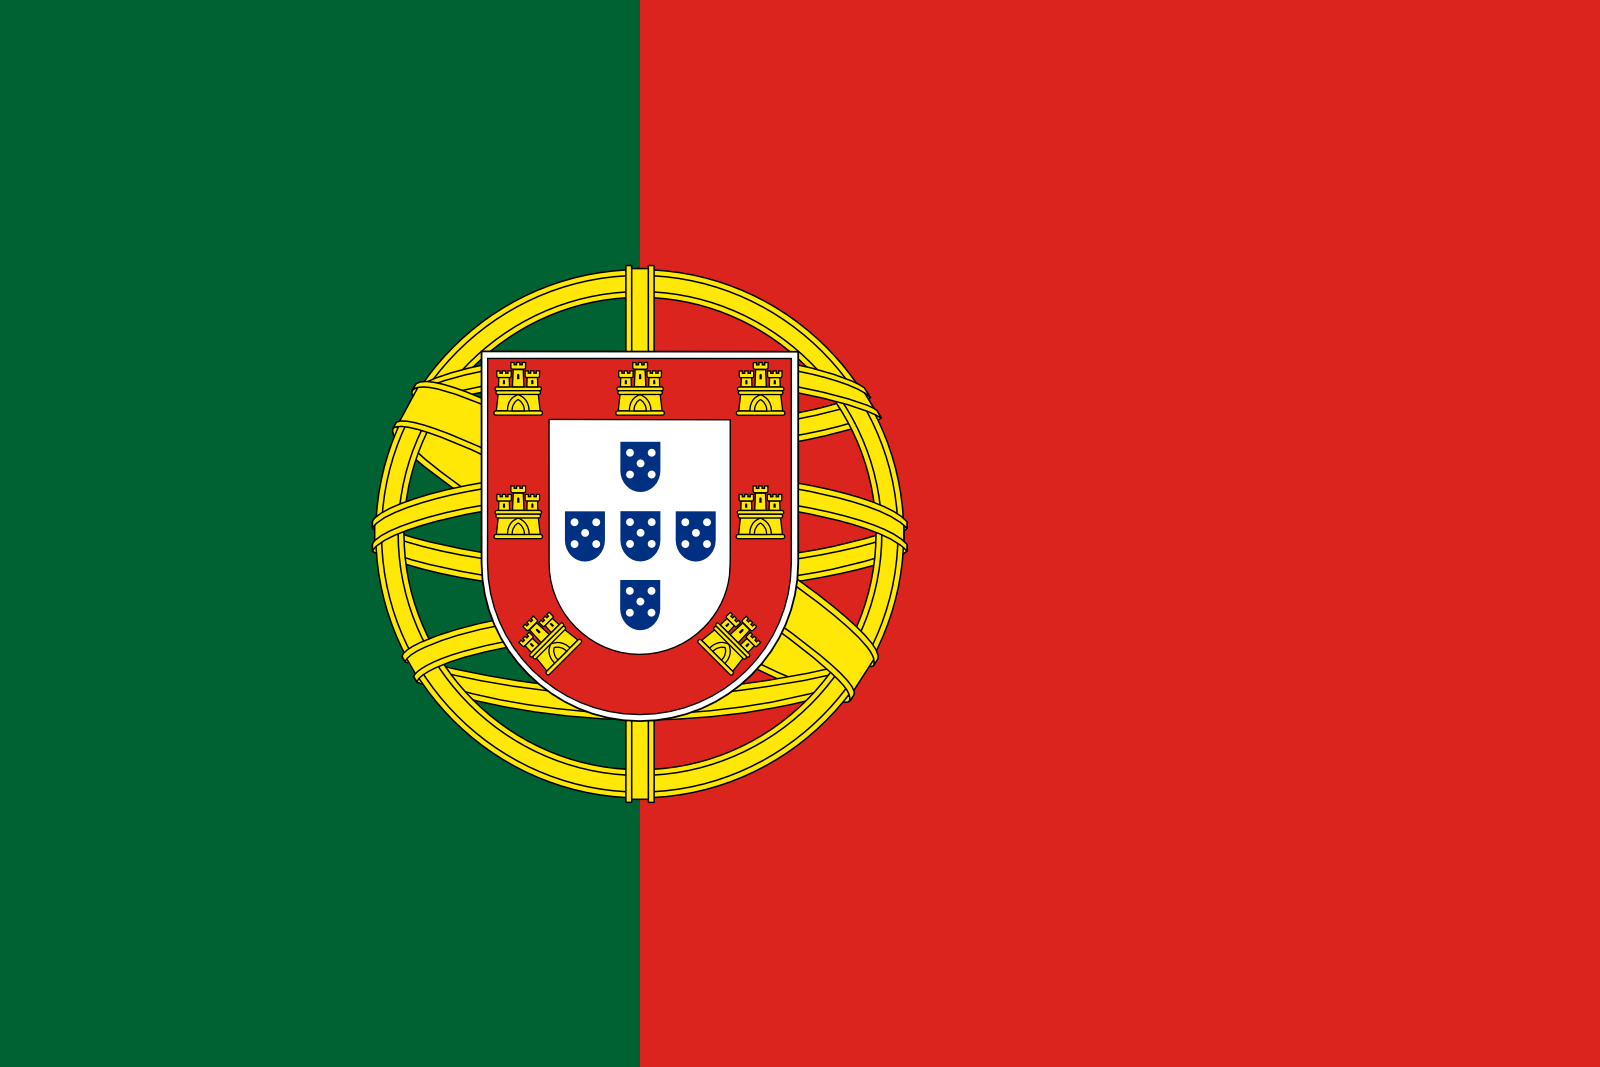 File:Liga Portugal.jpg - Wikimedia Commons